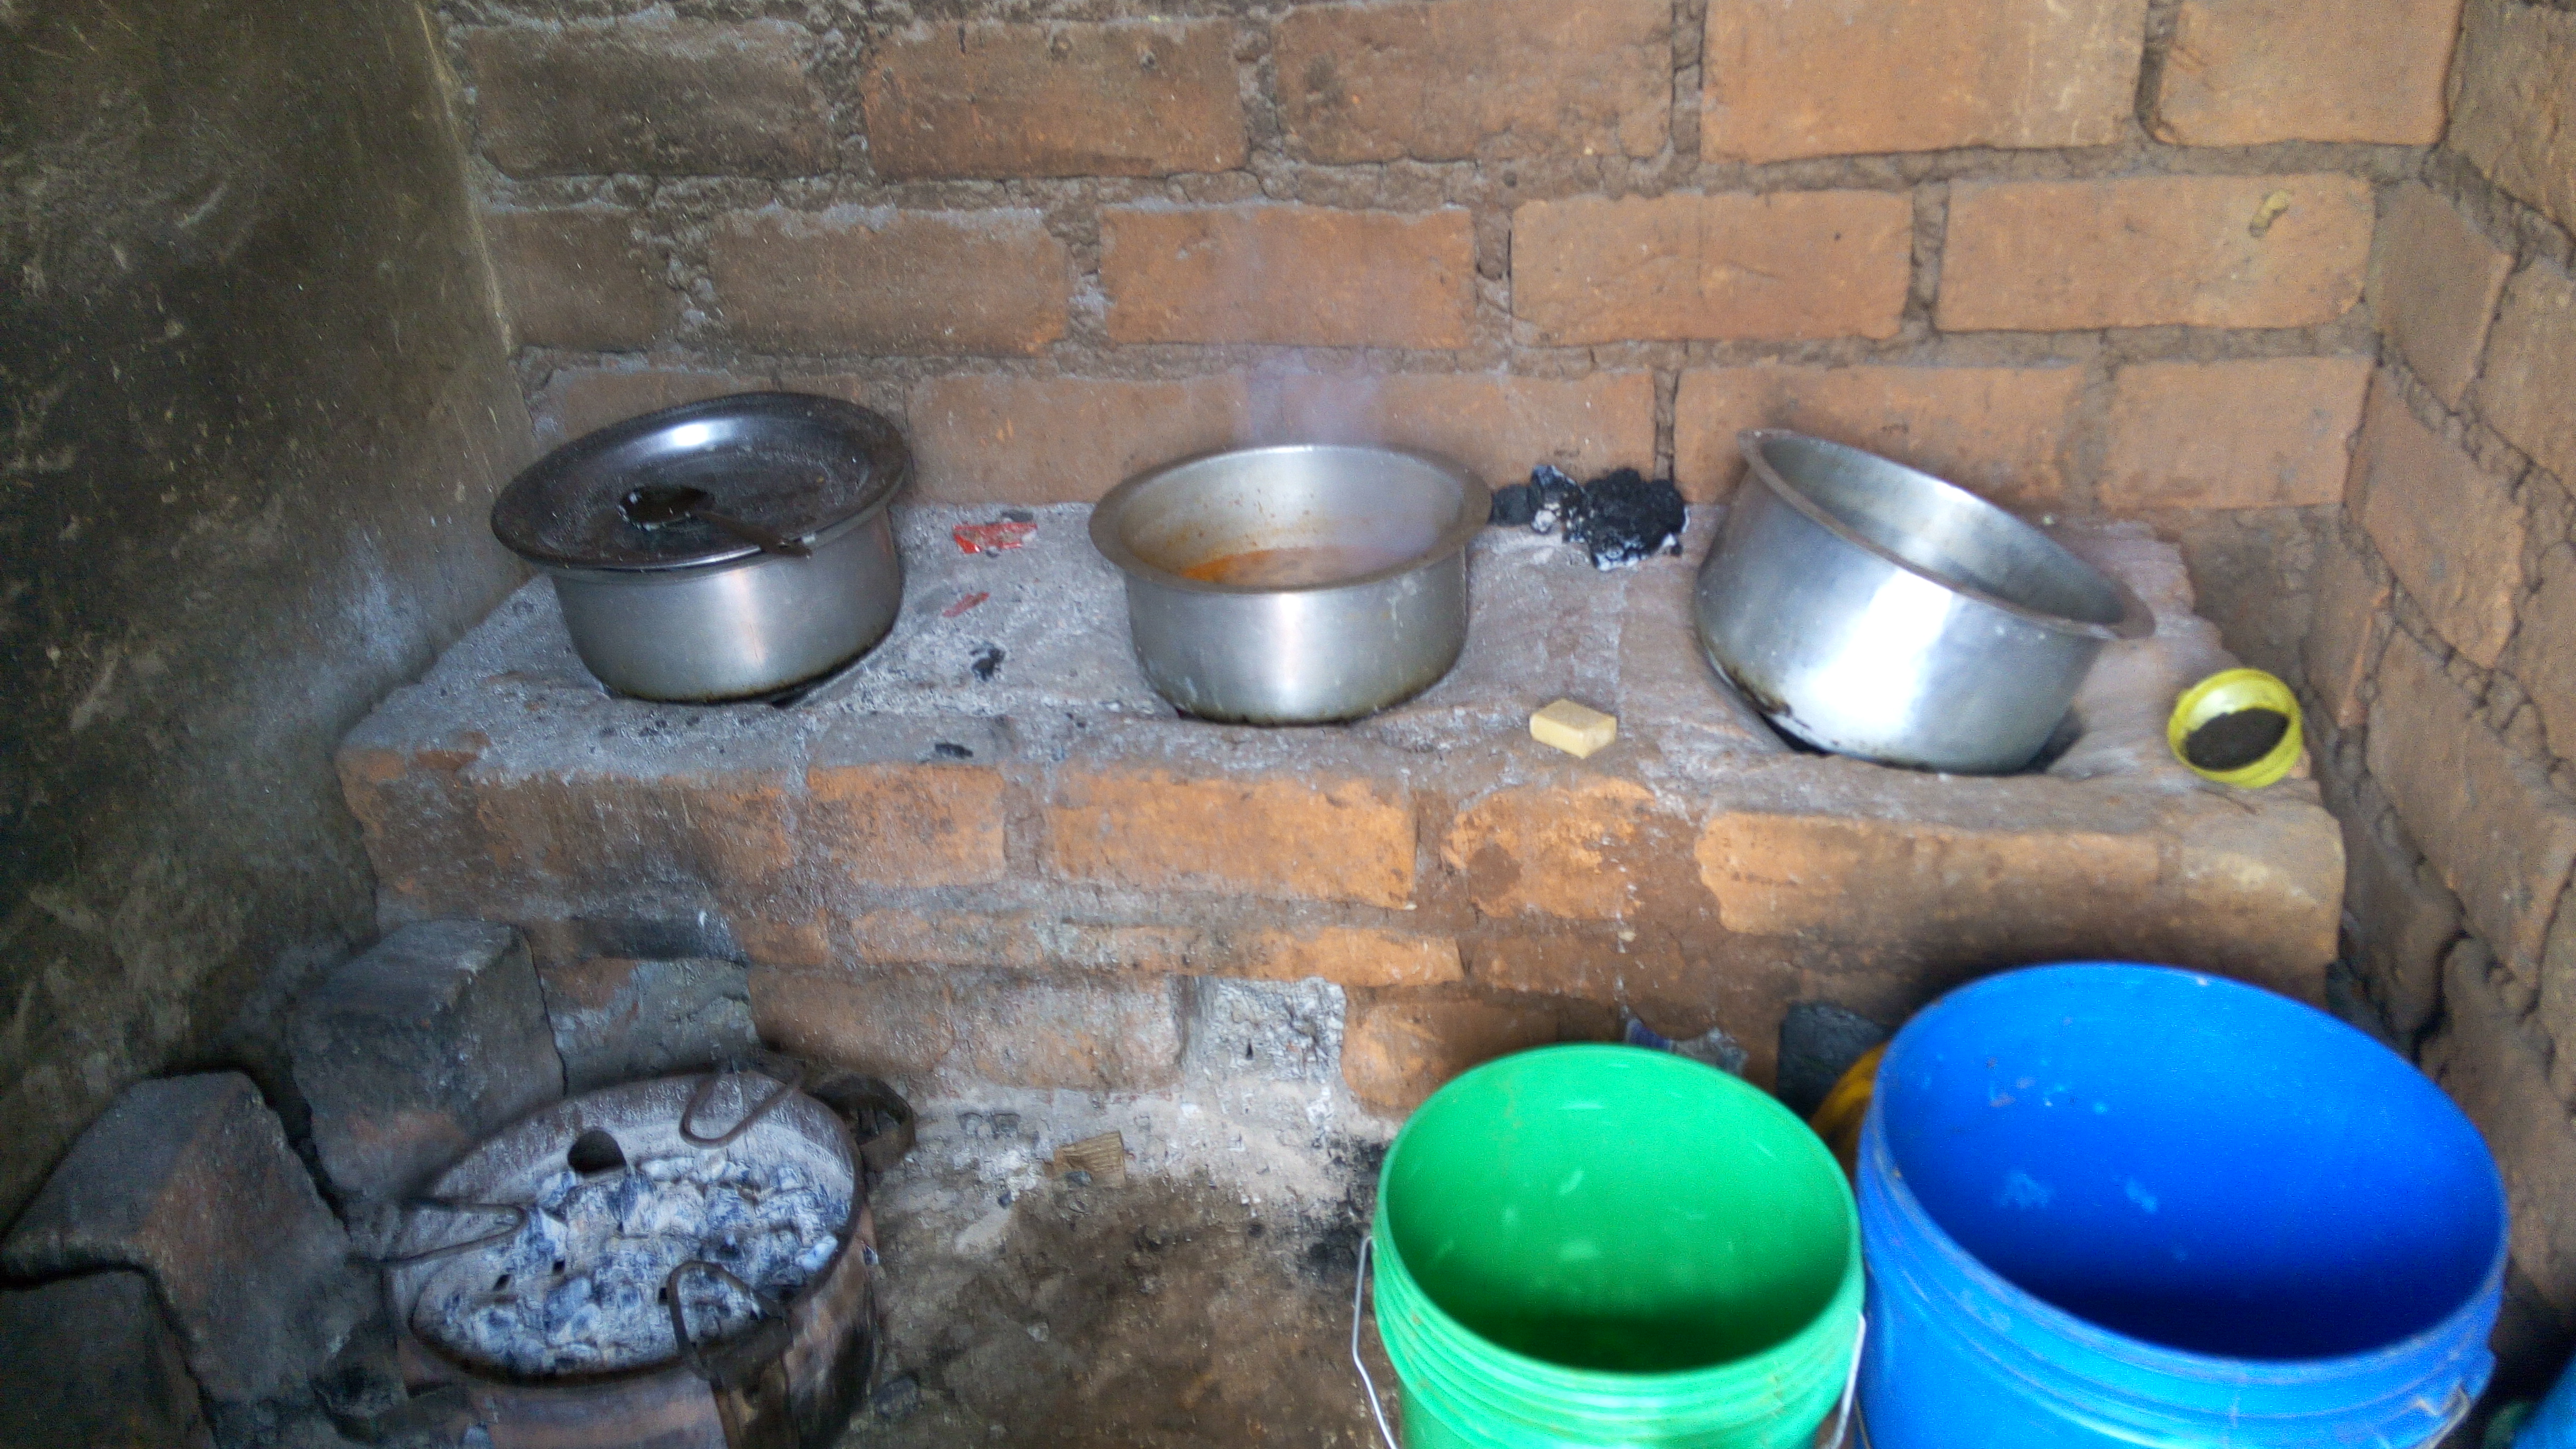 Extention servises... Efficiency stove at Kazilamiunda village